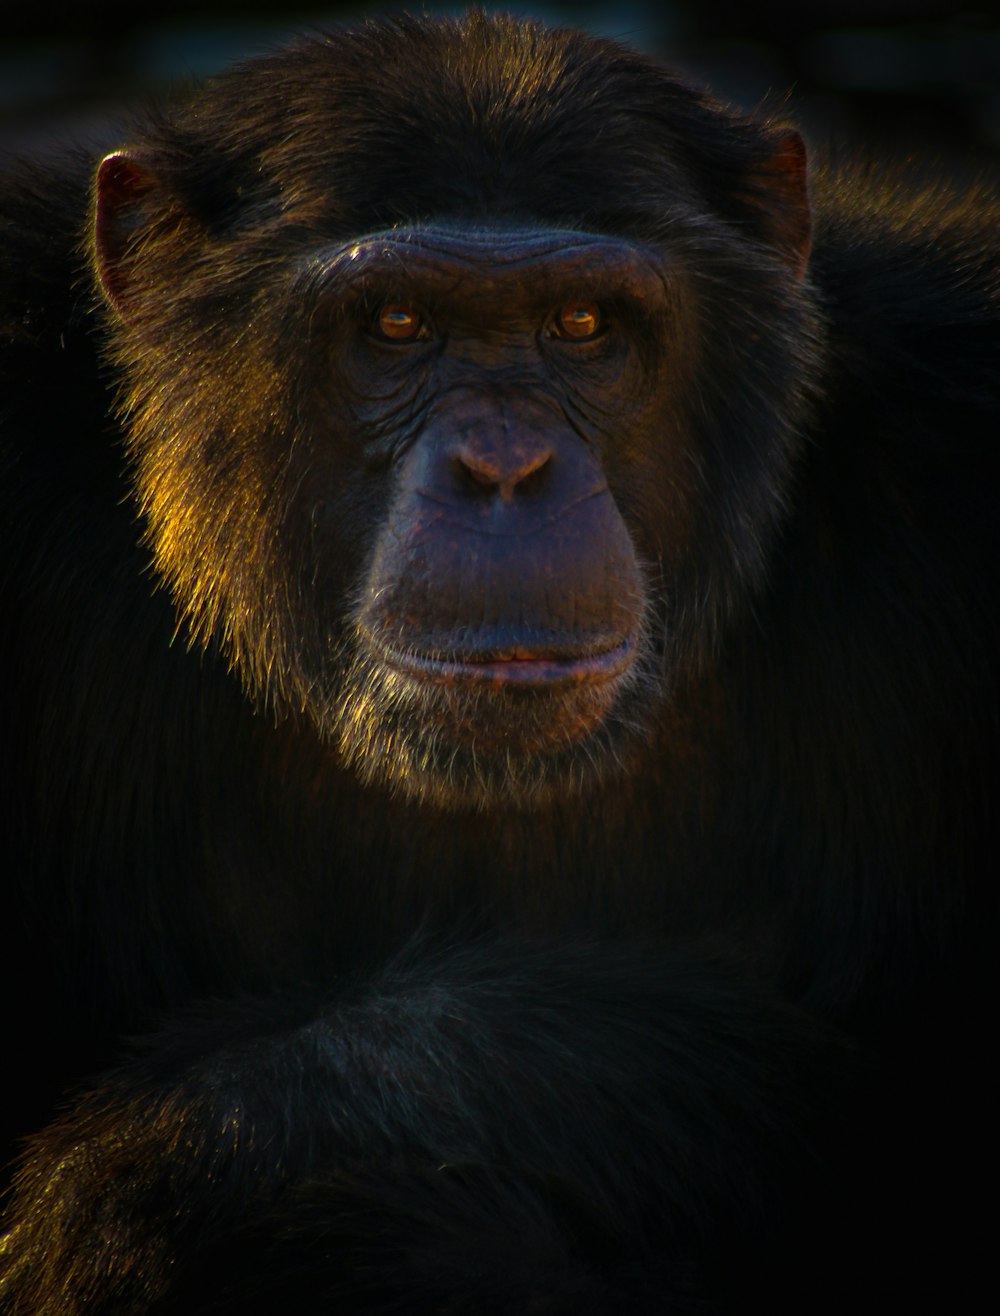 macaco preto e marrom na fotografia de perto